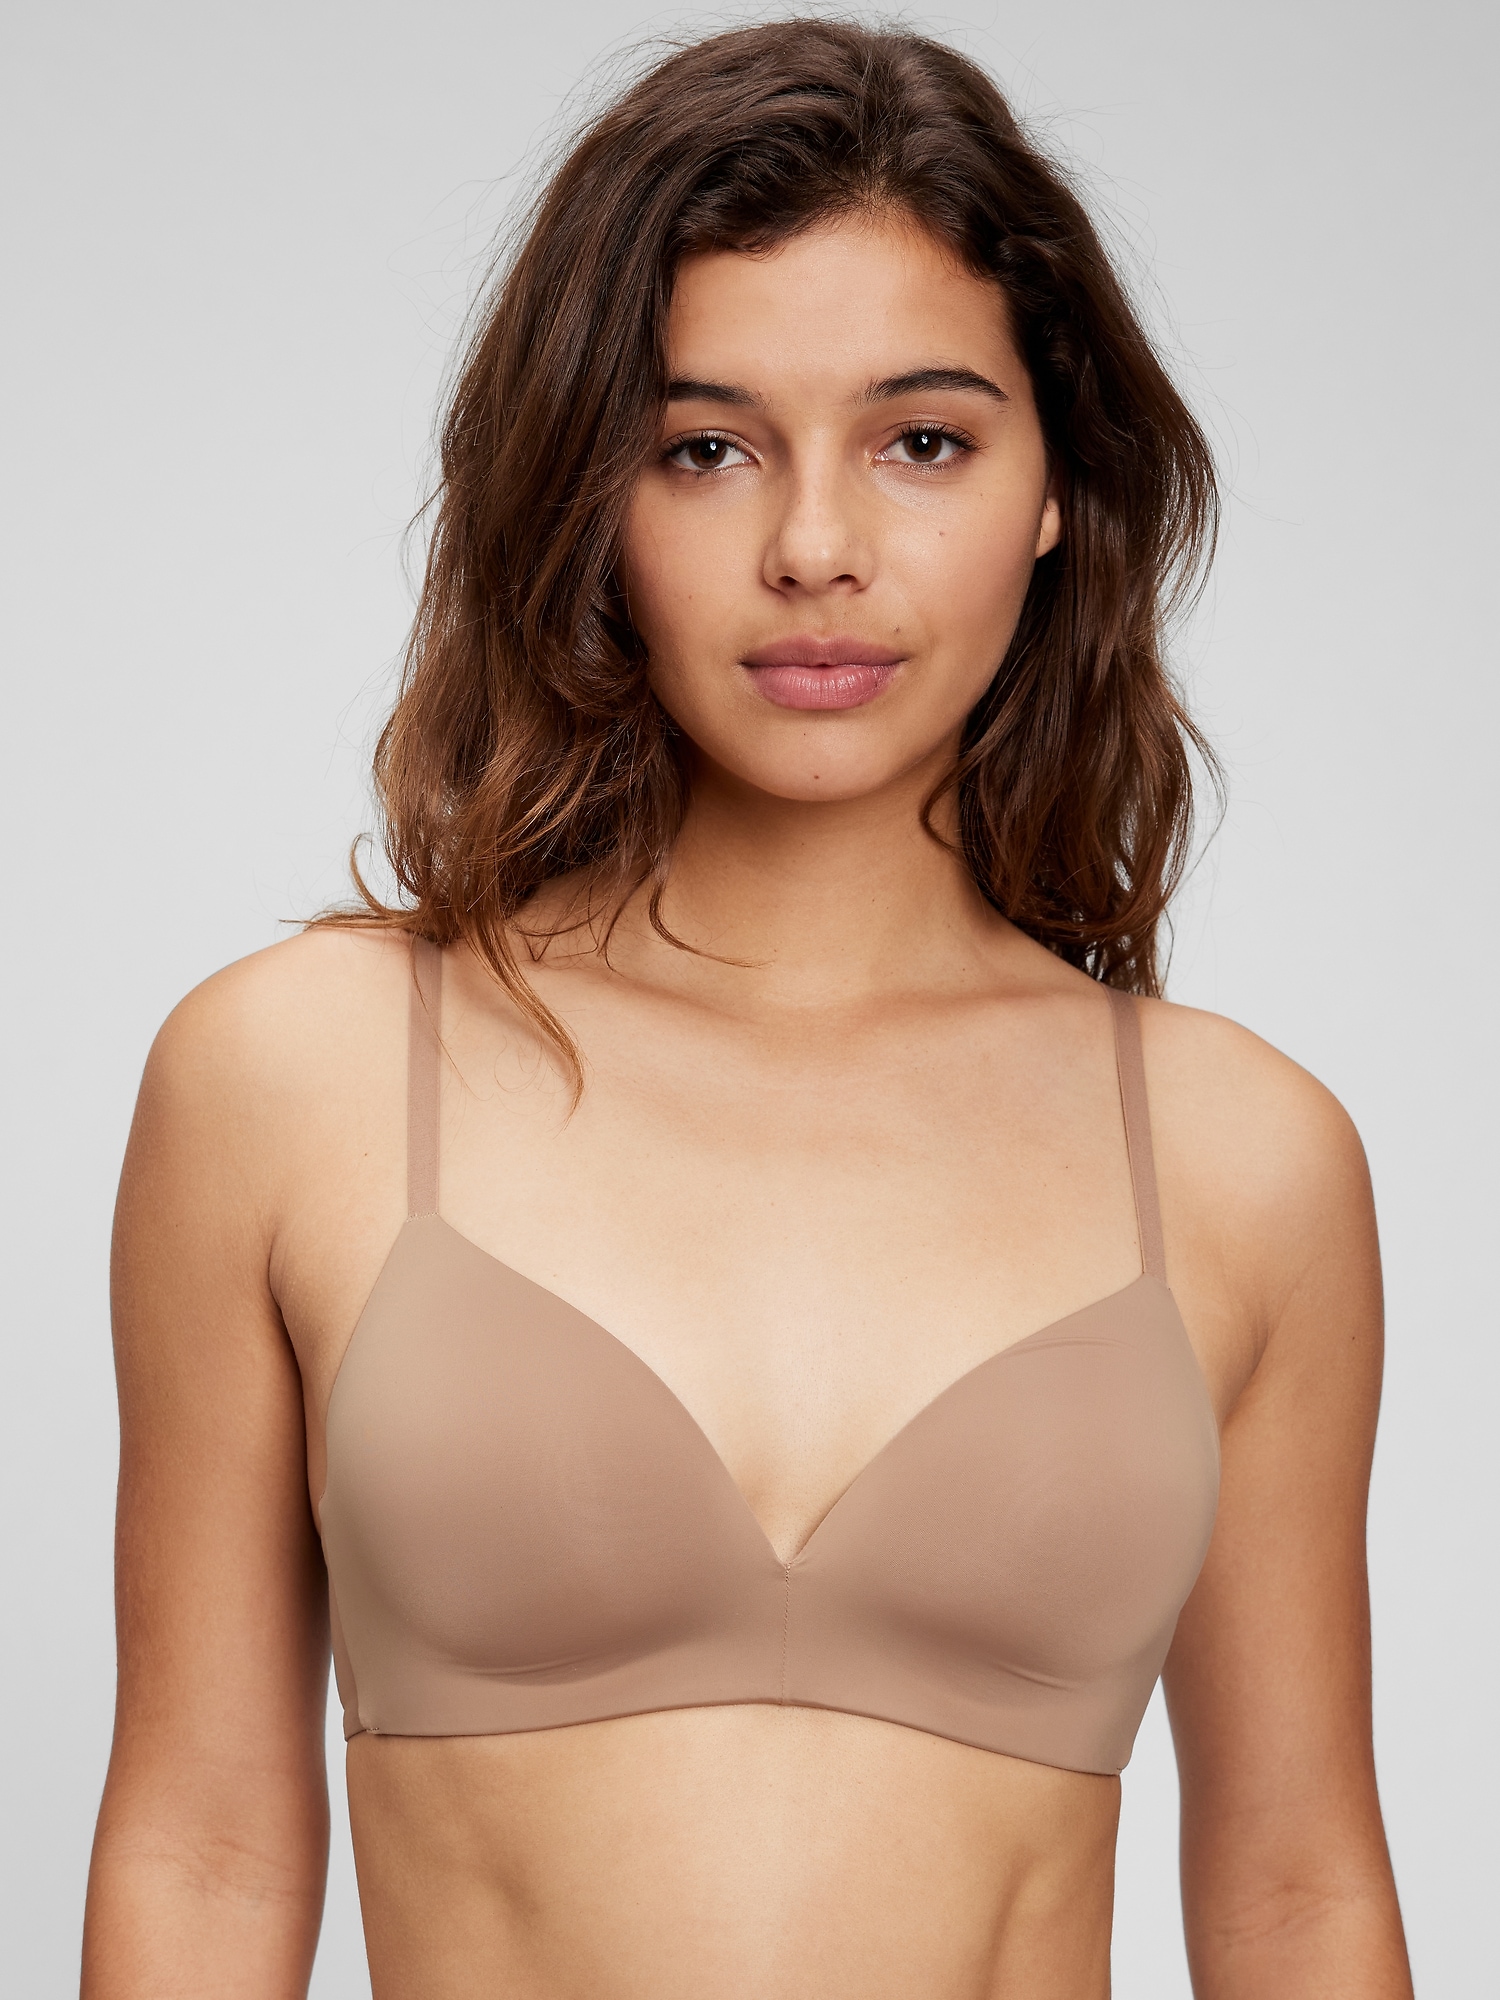 Soft bra & Wireless bras - Bras - Lingerie - Shop by Product - Ladies